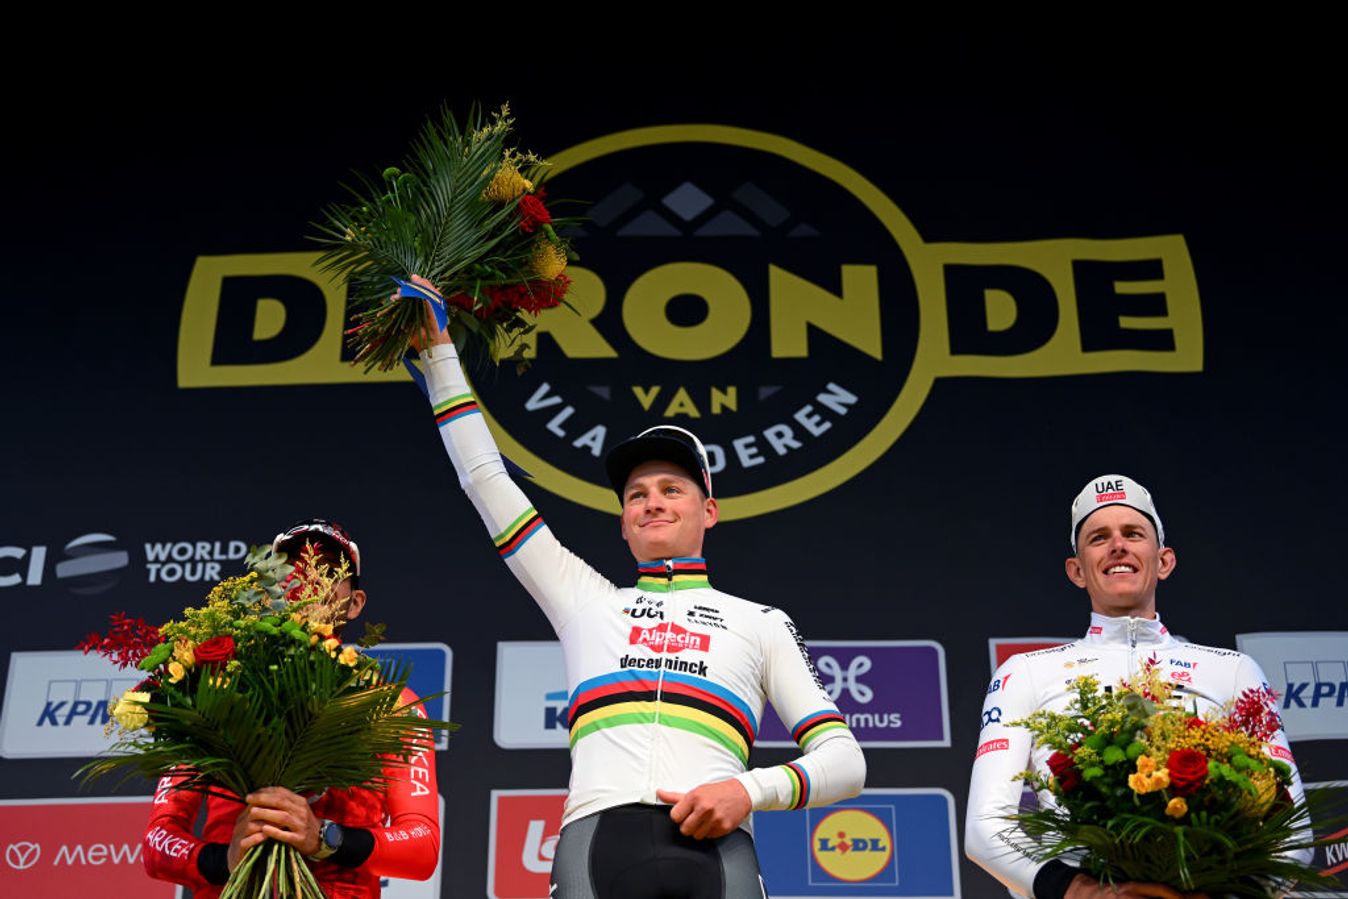 The Flanders podium